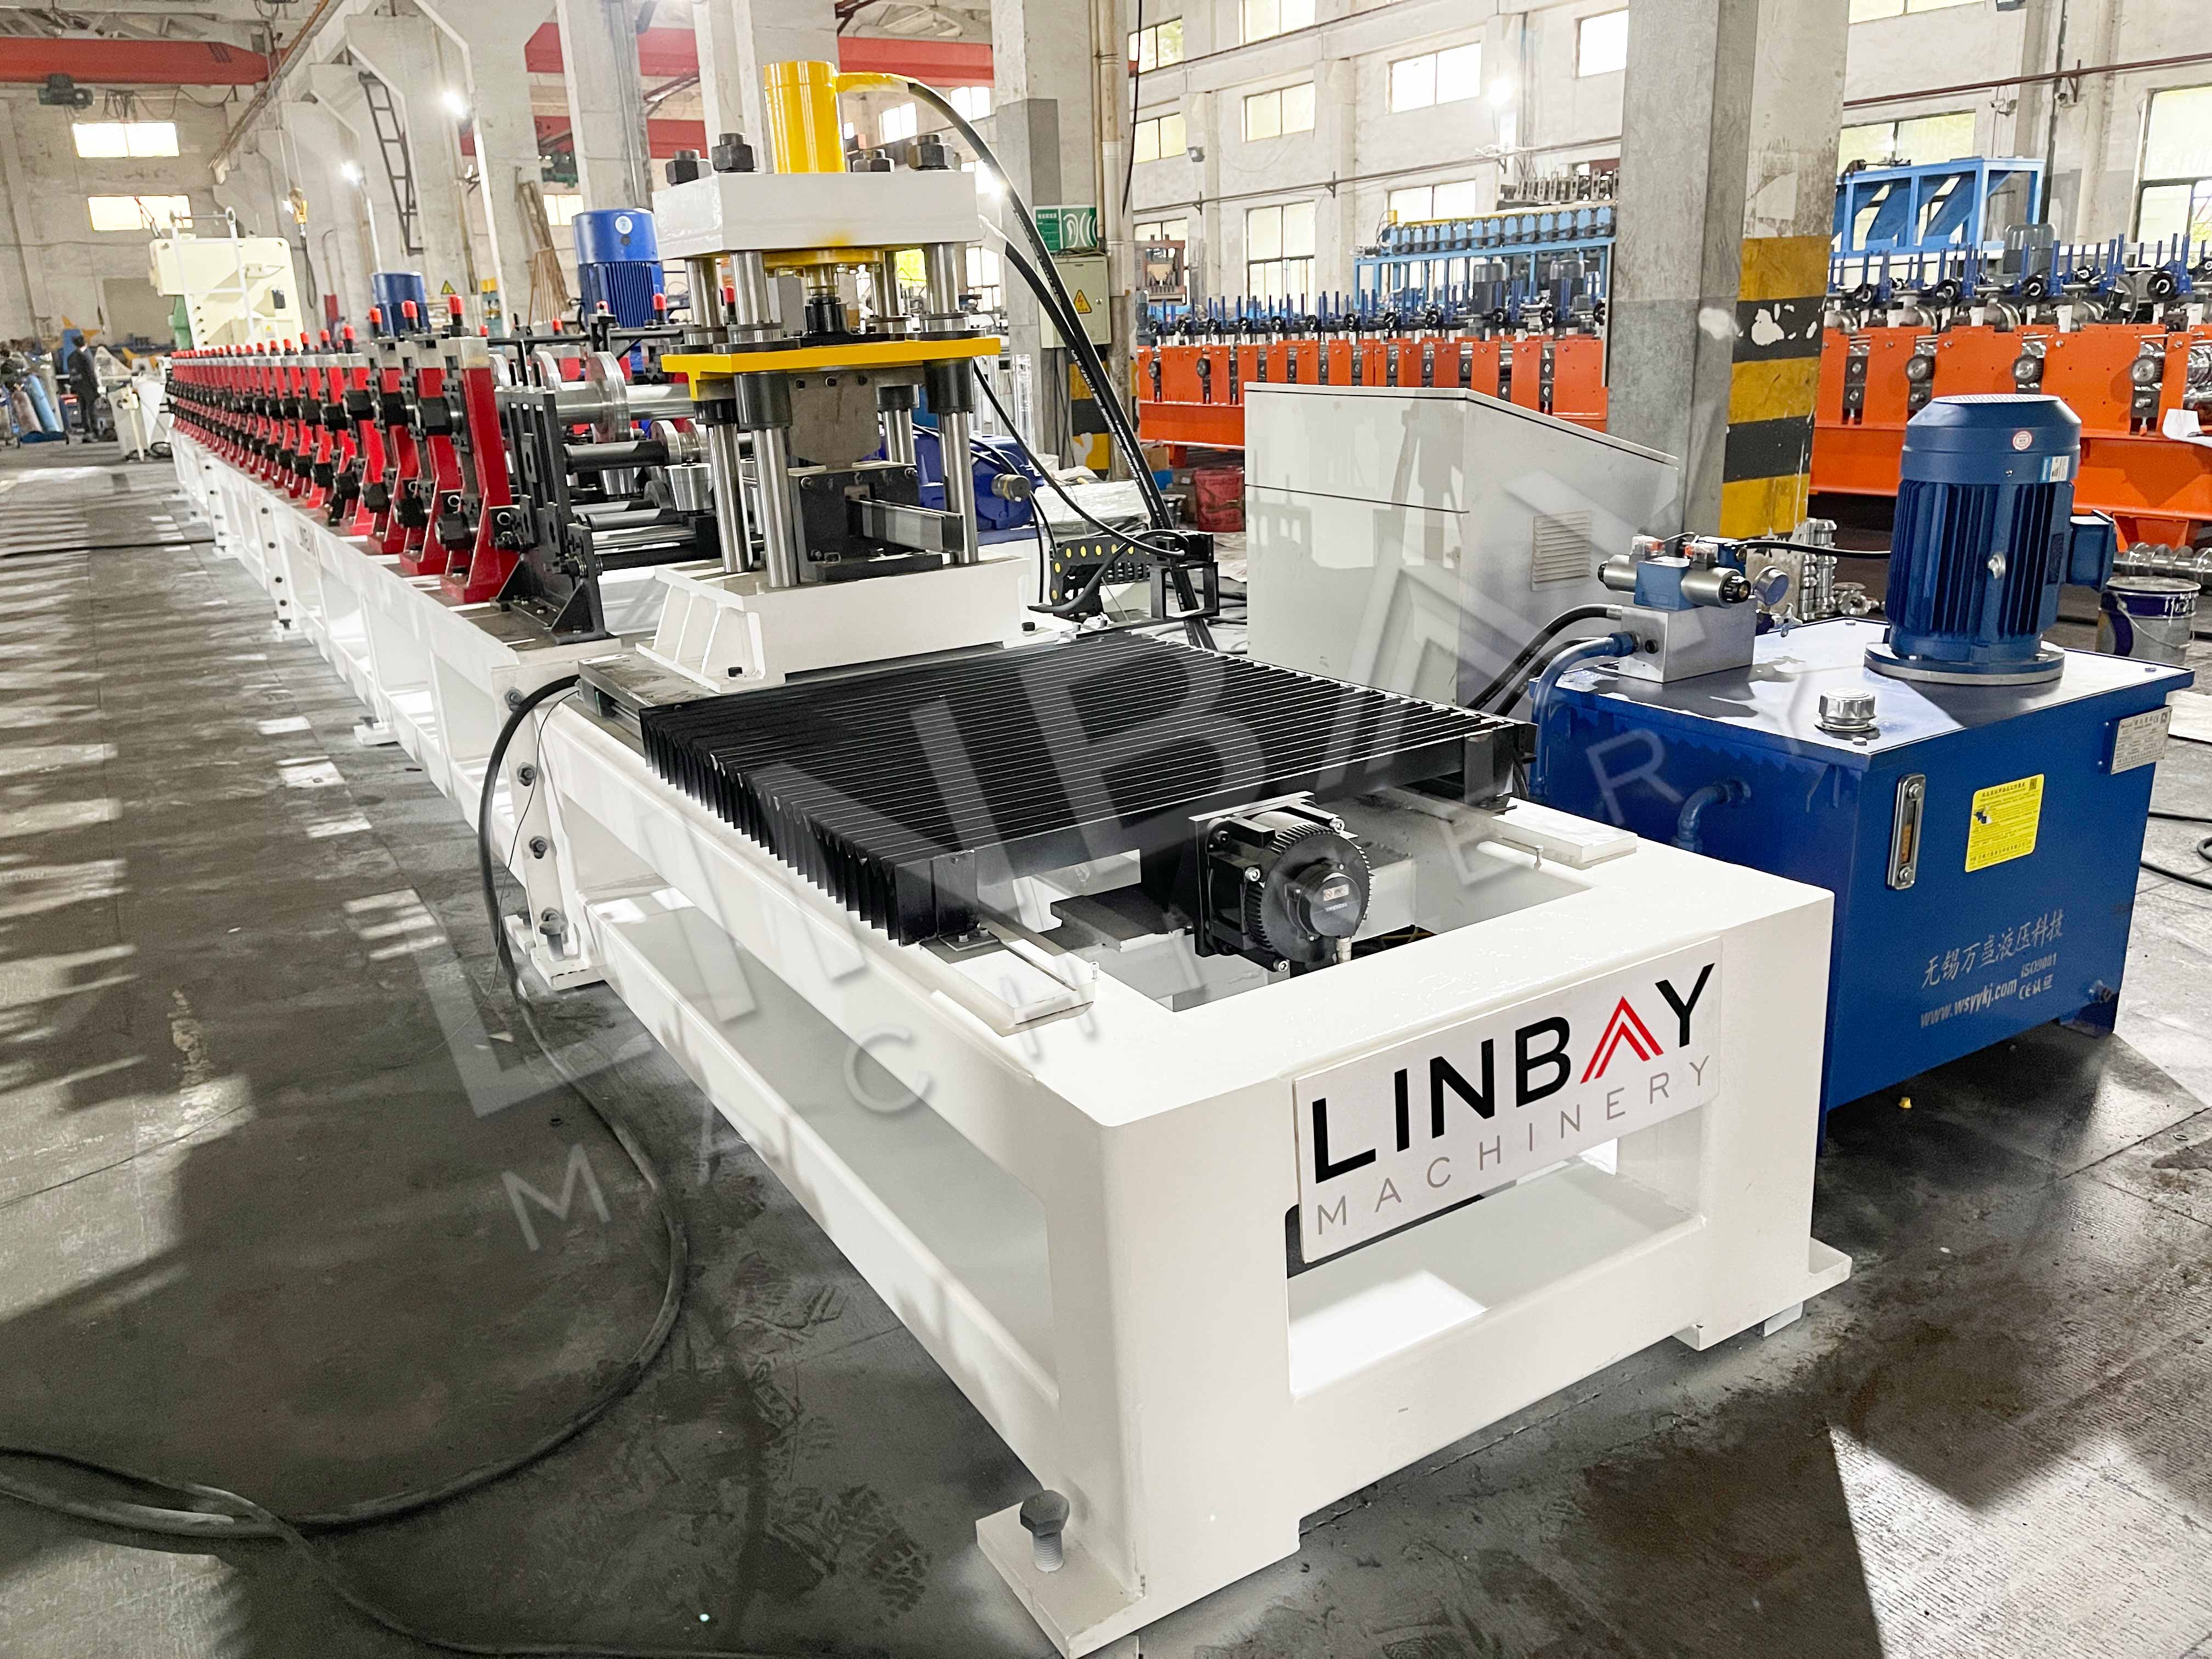 LINBAY-Ekspor Máquina Conformadora dan Máquina de Corte Longitudinal ke Irak